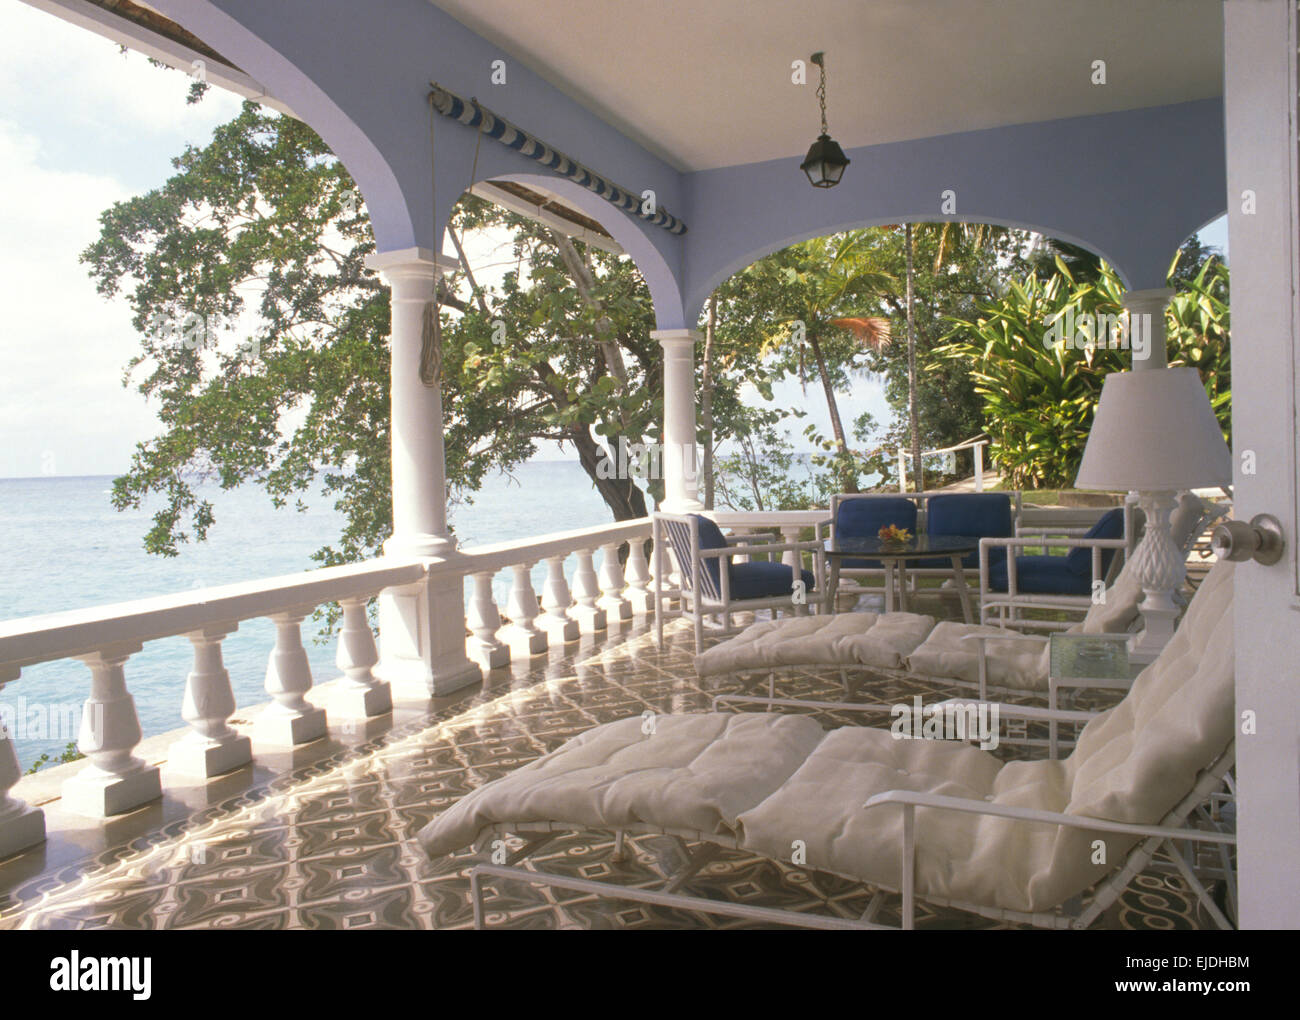 Loungers on tiled veranda of Caribbean villa overlooking the ocean Stock Photo